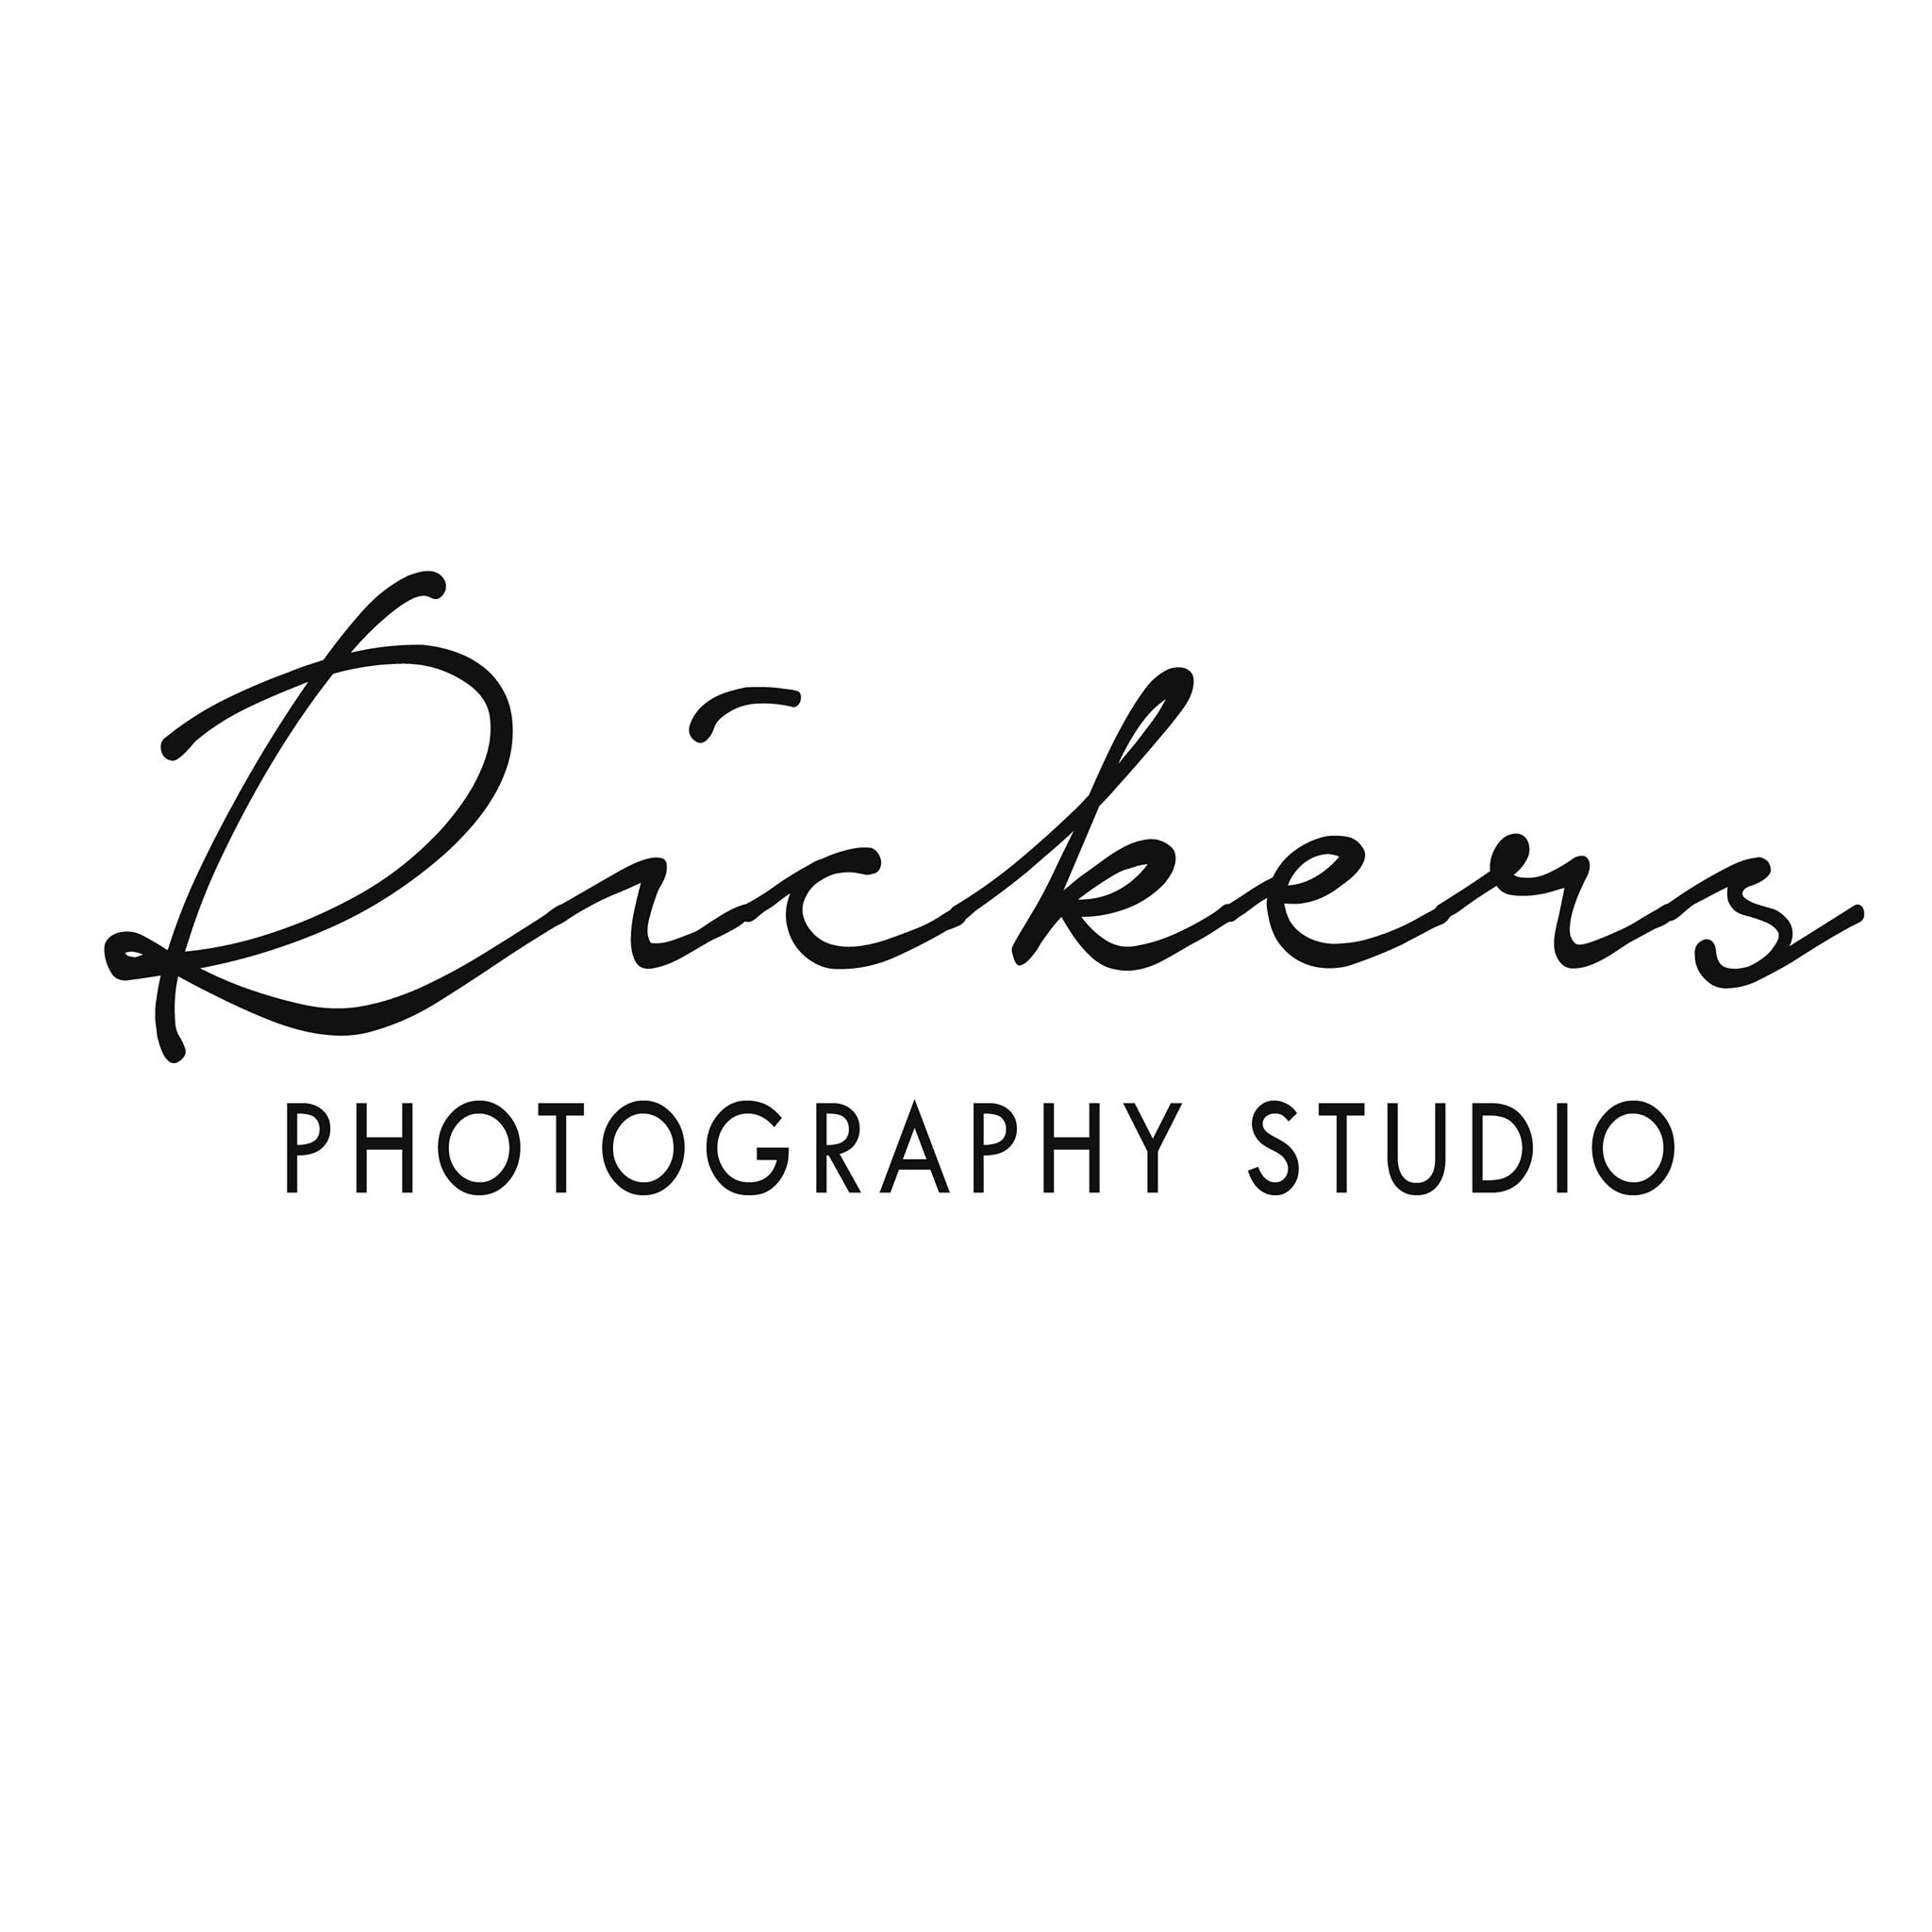 Rickers Photography Studio 918 3rd Ave, Worthington Minnesota 56187